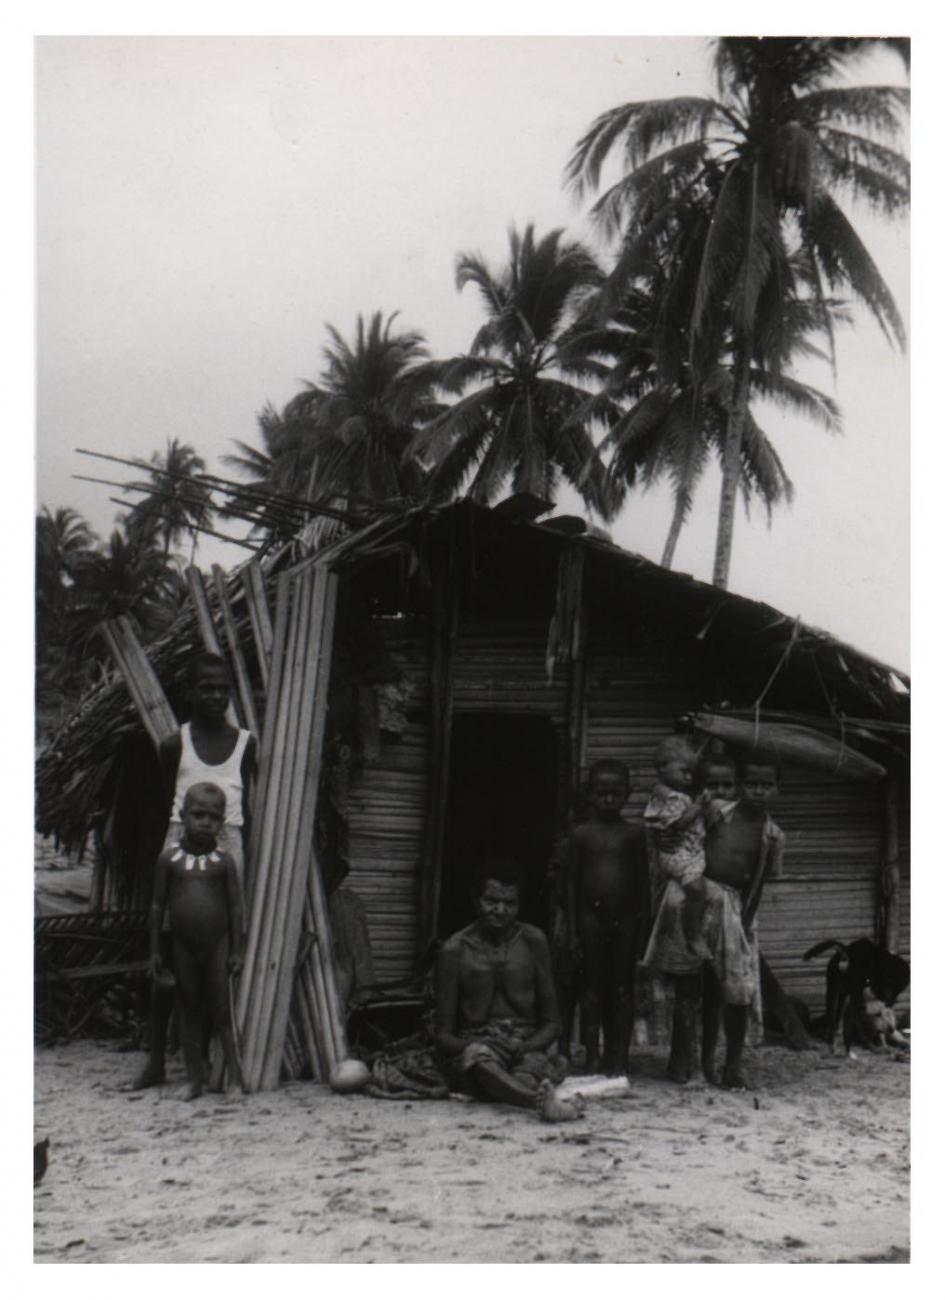 BD/54/30 - 
Groepsfoto Papoea&#039;s, kampong Kompol I, Merauke
